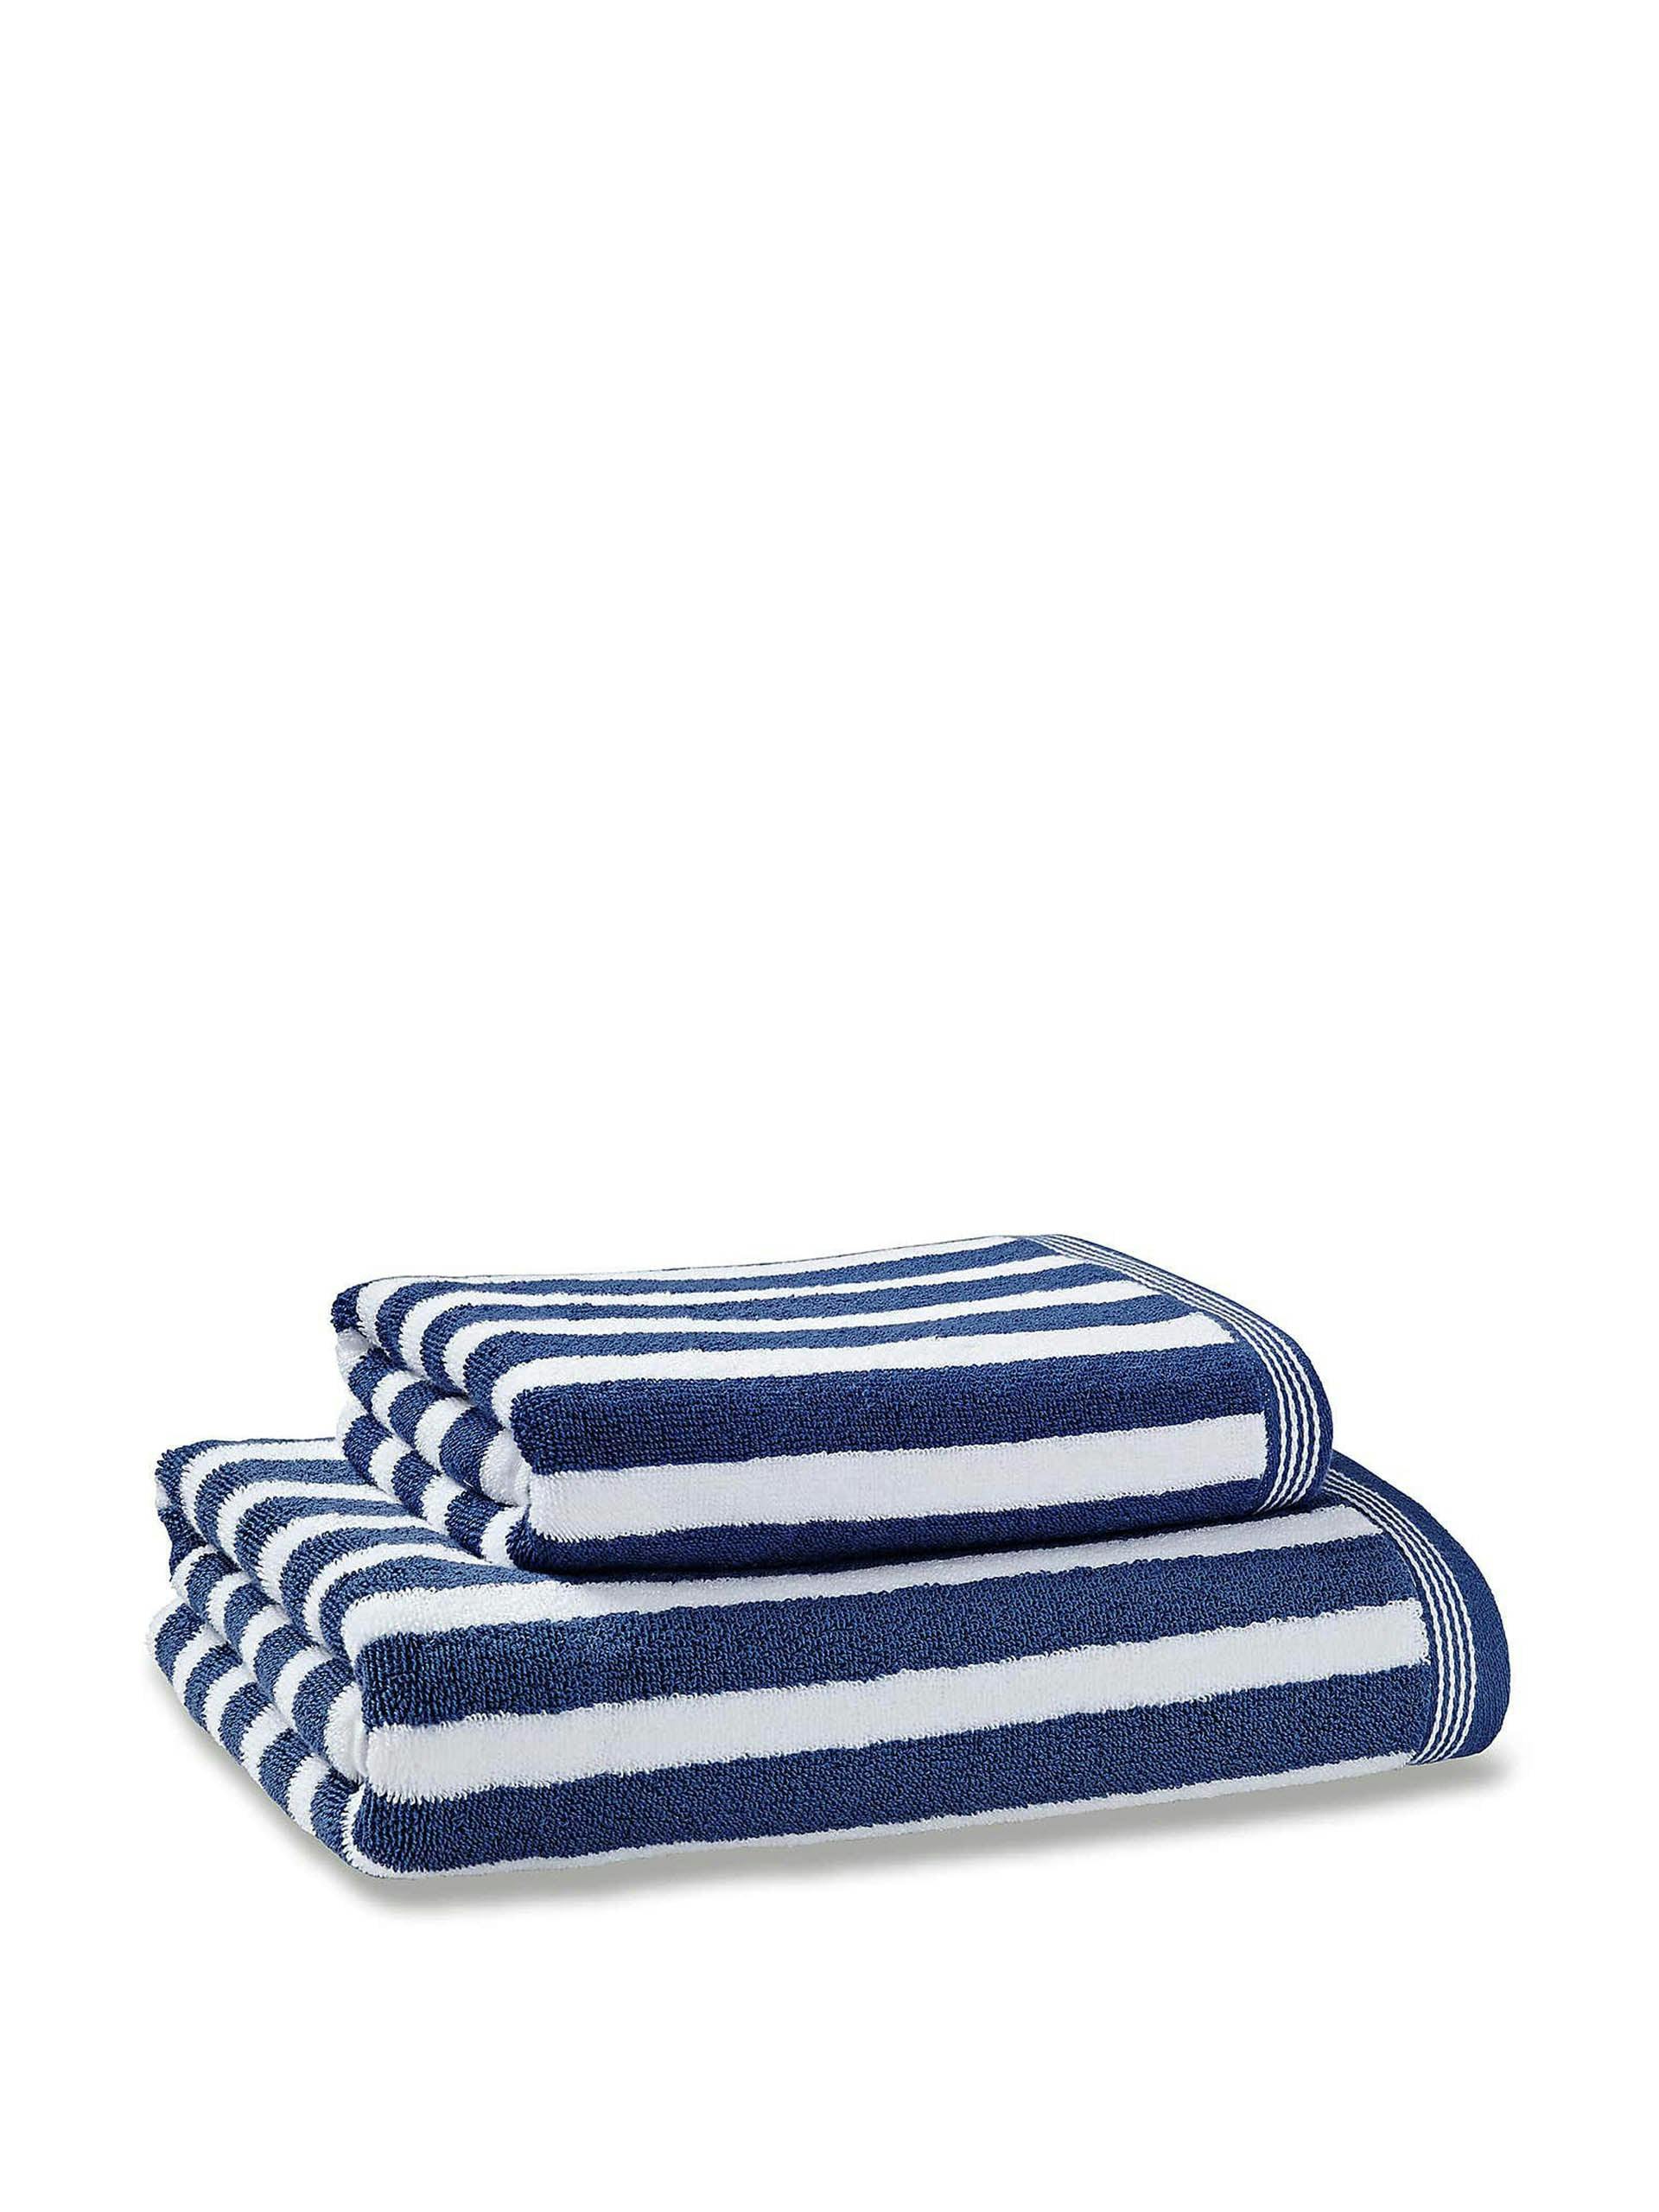 Nautical stripe navy towel